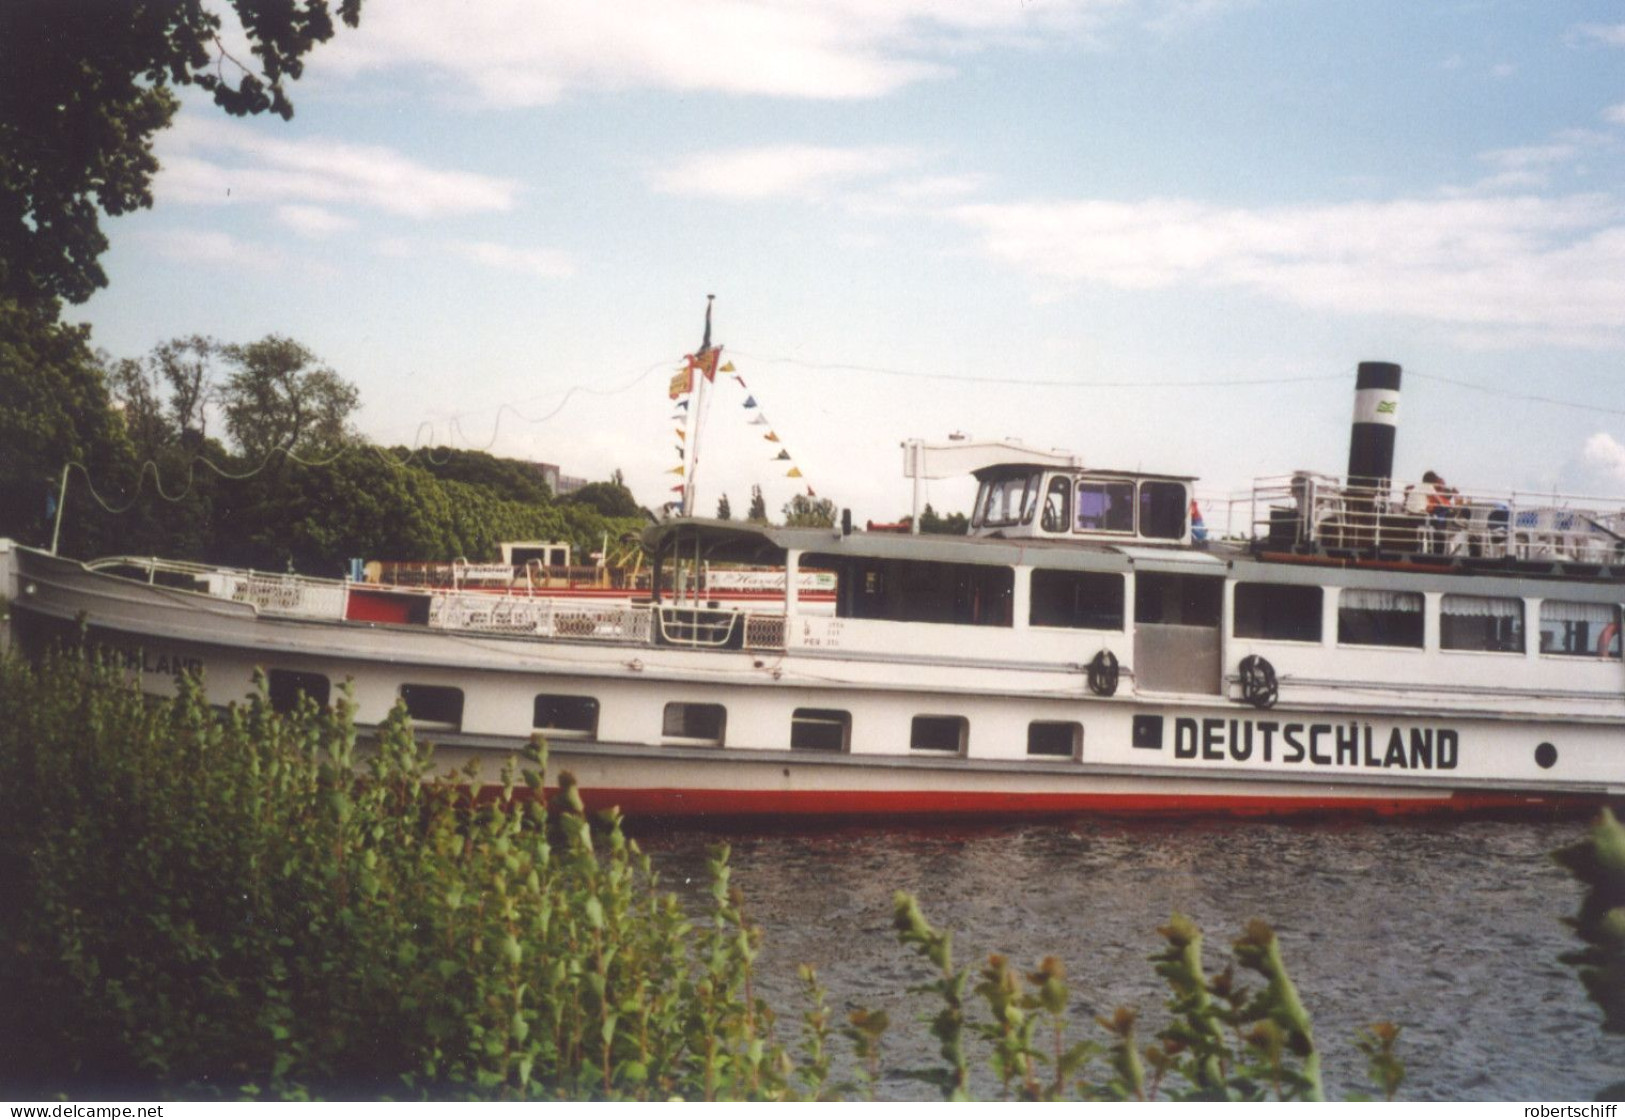 Foto Motorschiff Deutschland, Fahrgastschiff, Berlin Tegel - Bateaux